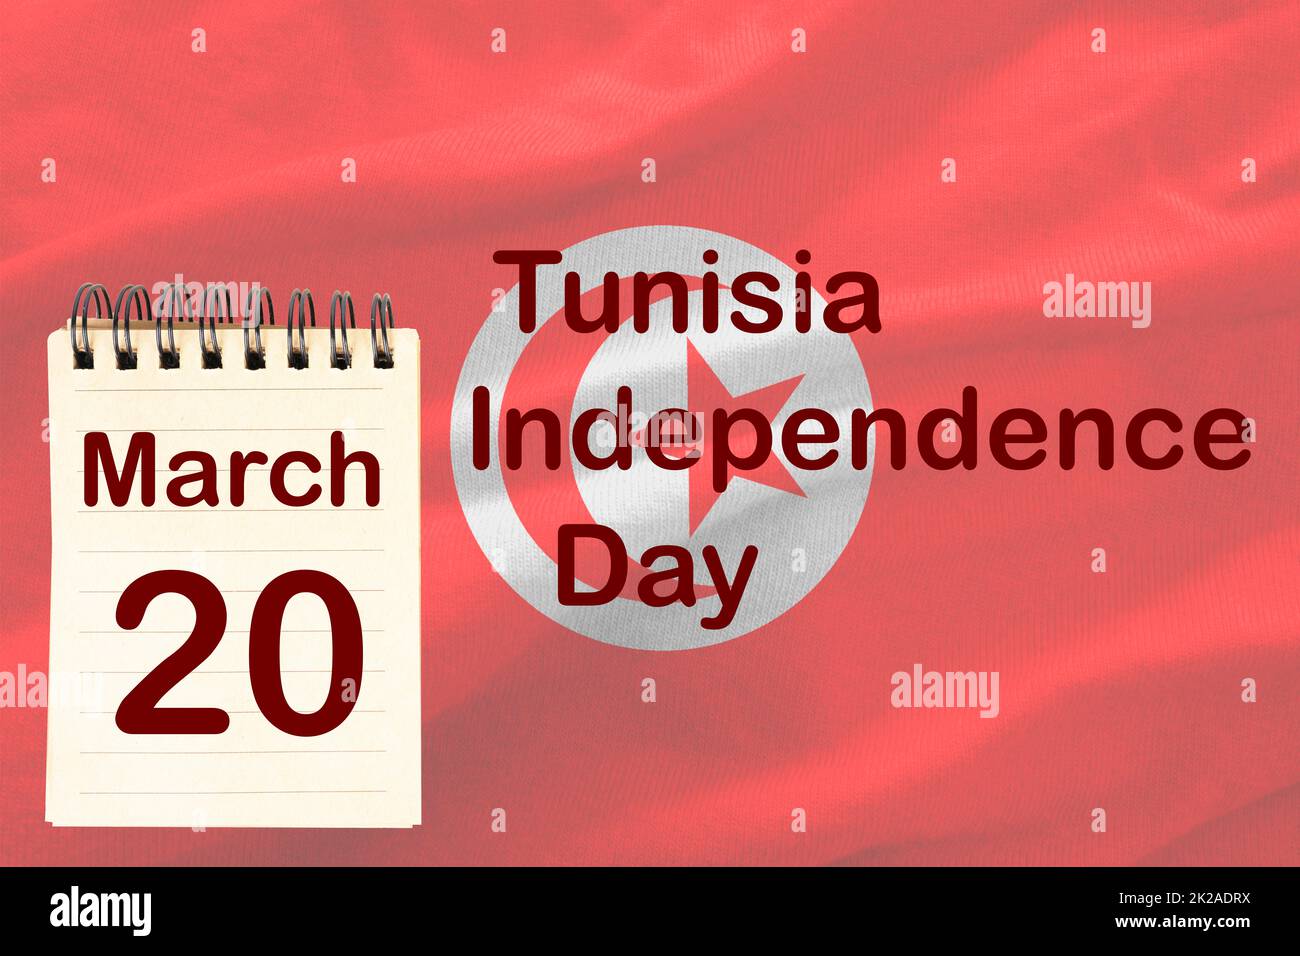 Tunisia Independence Day Stock Photo